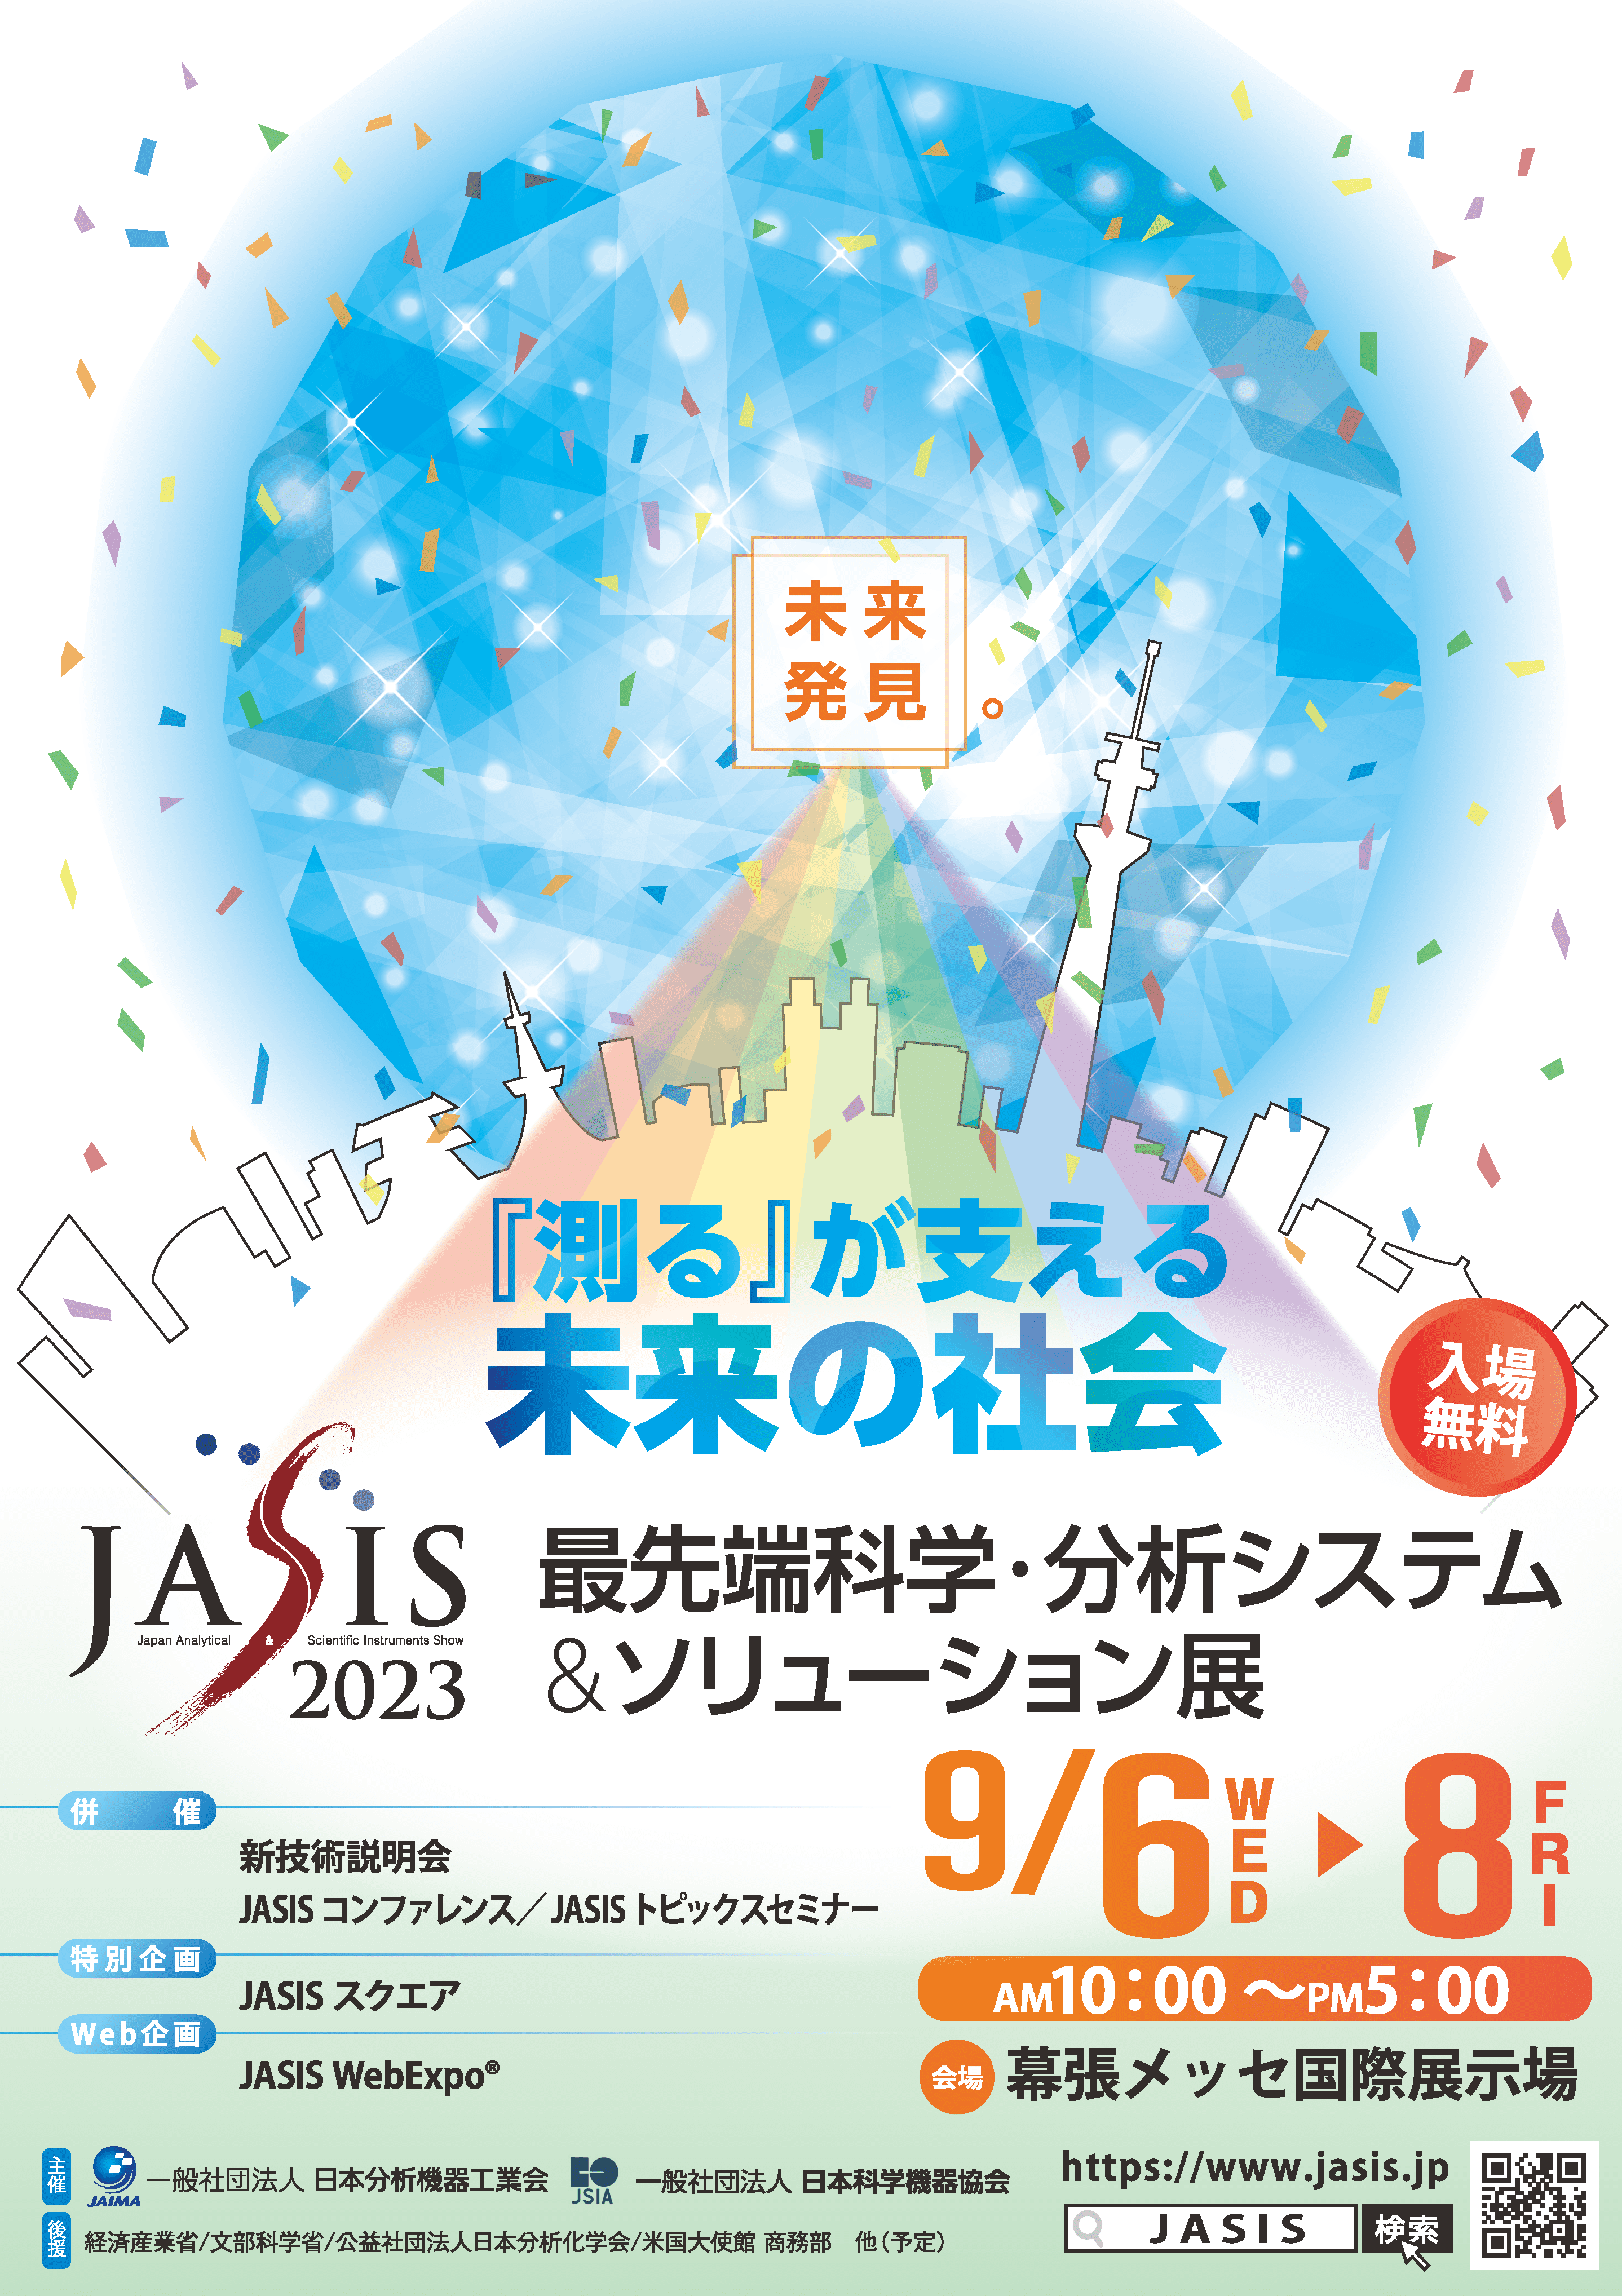 JASIS2023 入江株式会社